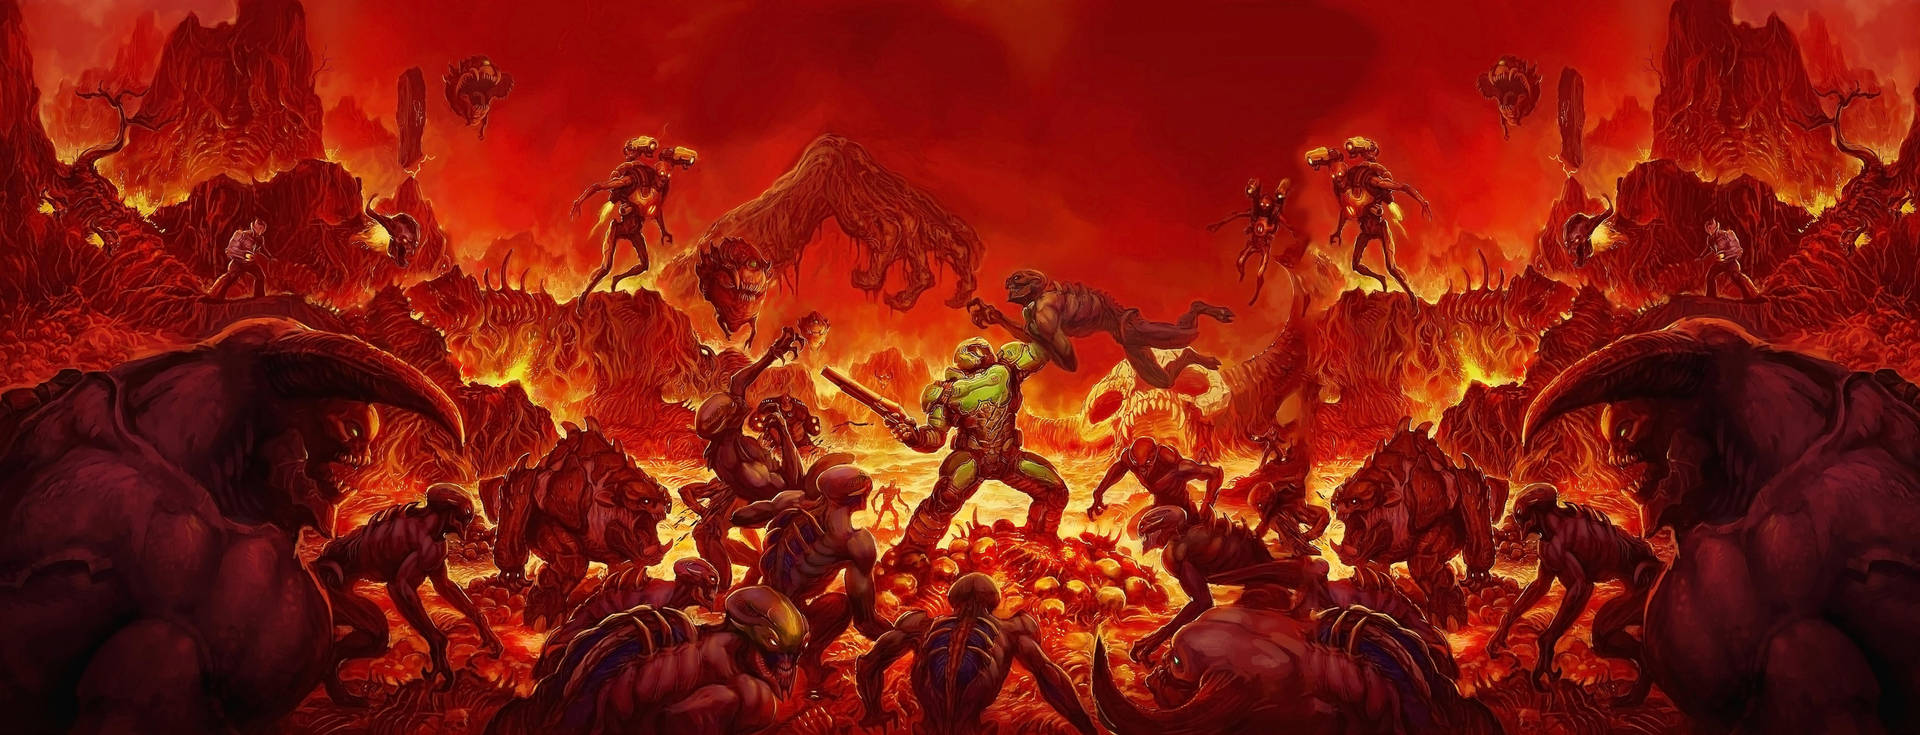 Doomguyen Una Batalla En Doom Eternal. Fondo de pantalla